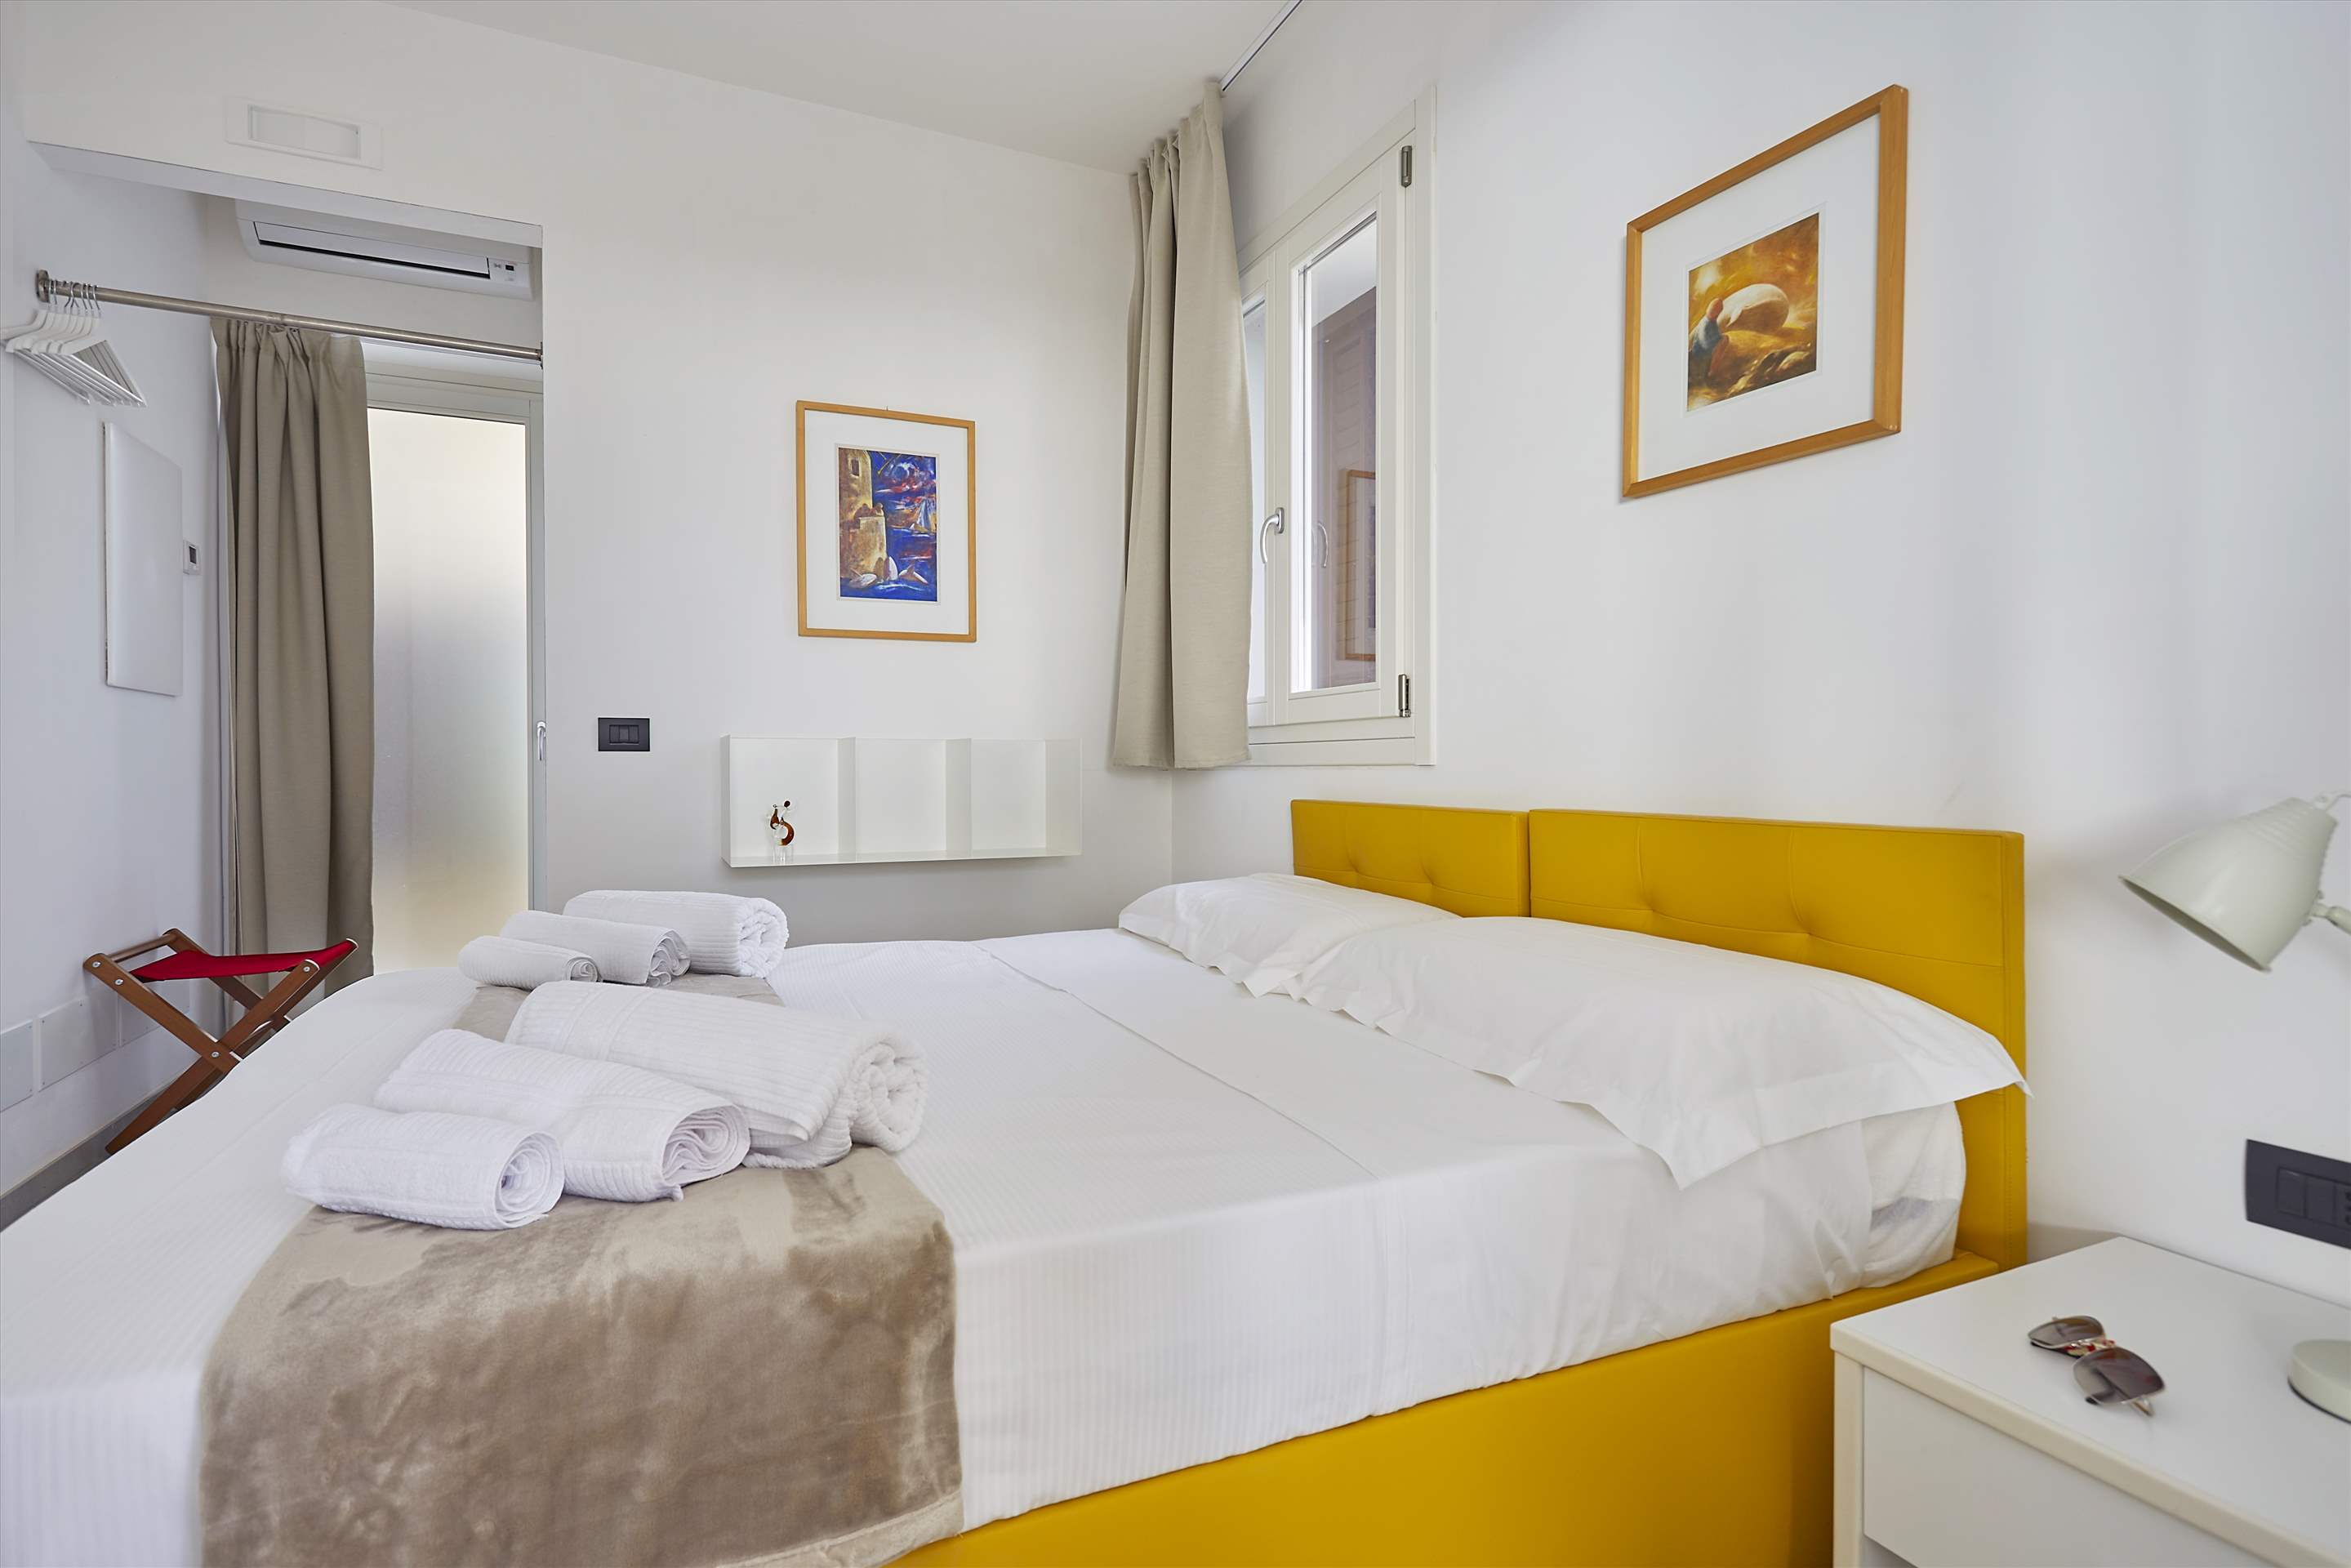 Bianca Levante, 3 bedroom villa in Southern Sicily, Sicily Photo #11